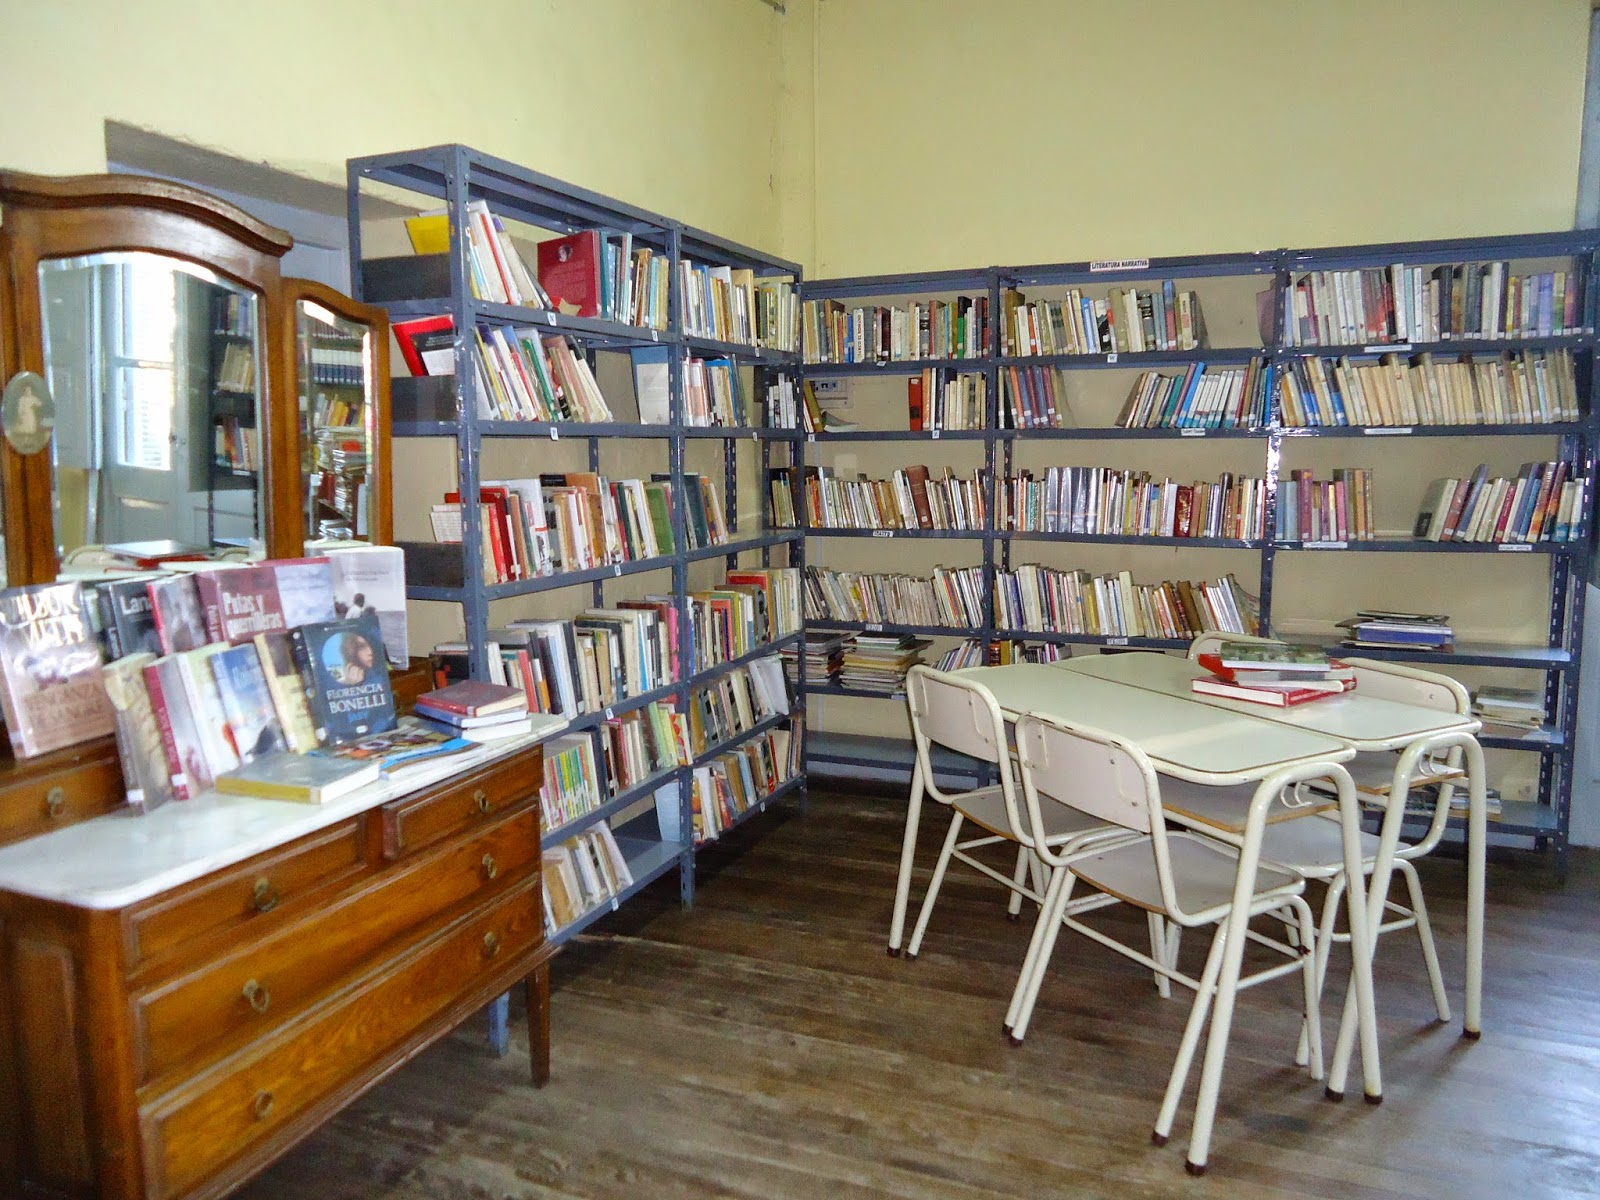 Biblioteca Popular "Sierra Chica" : Mudanza de la Biblioteca a comienzo